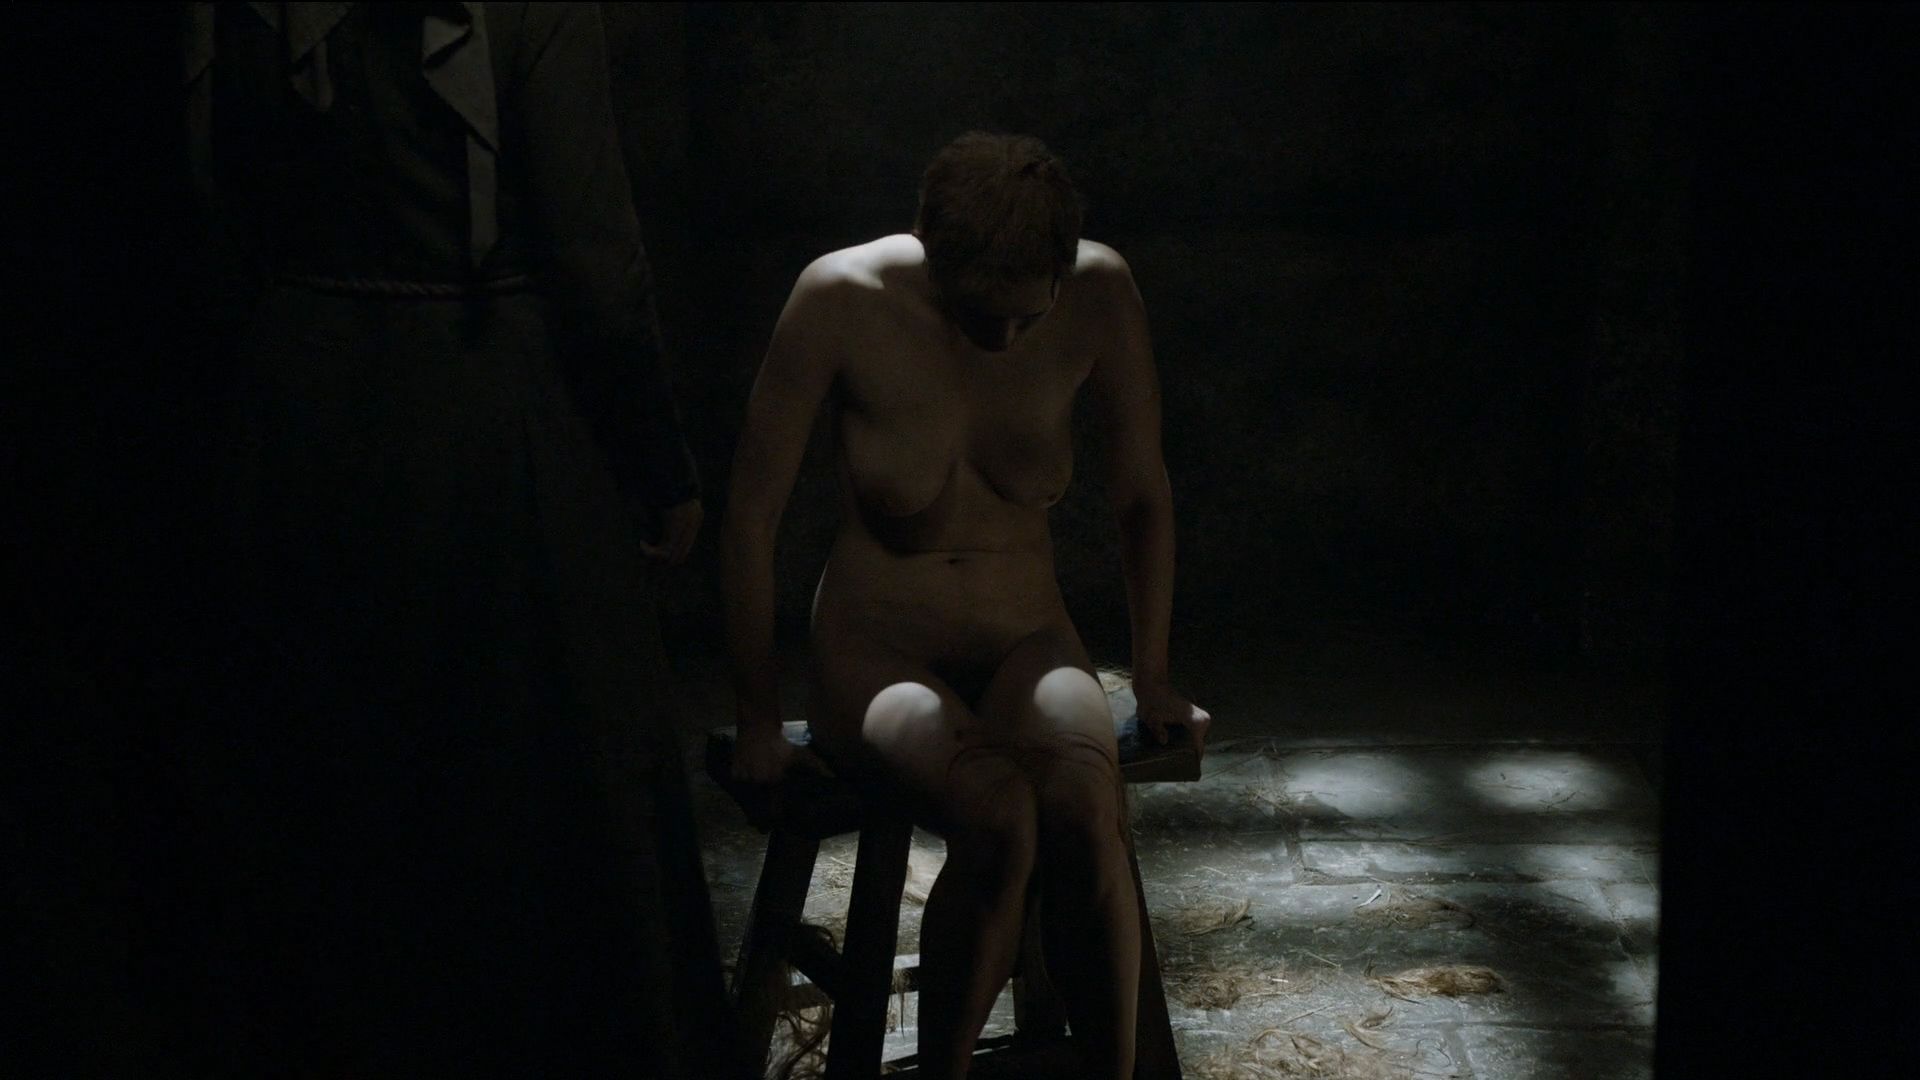 Lena Headey Nude Scenes Game of Thrones (Cersei Lannister) .